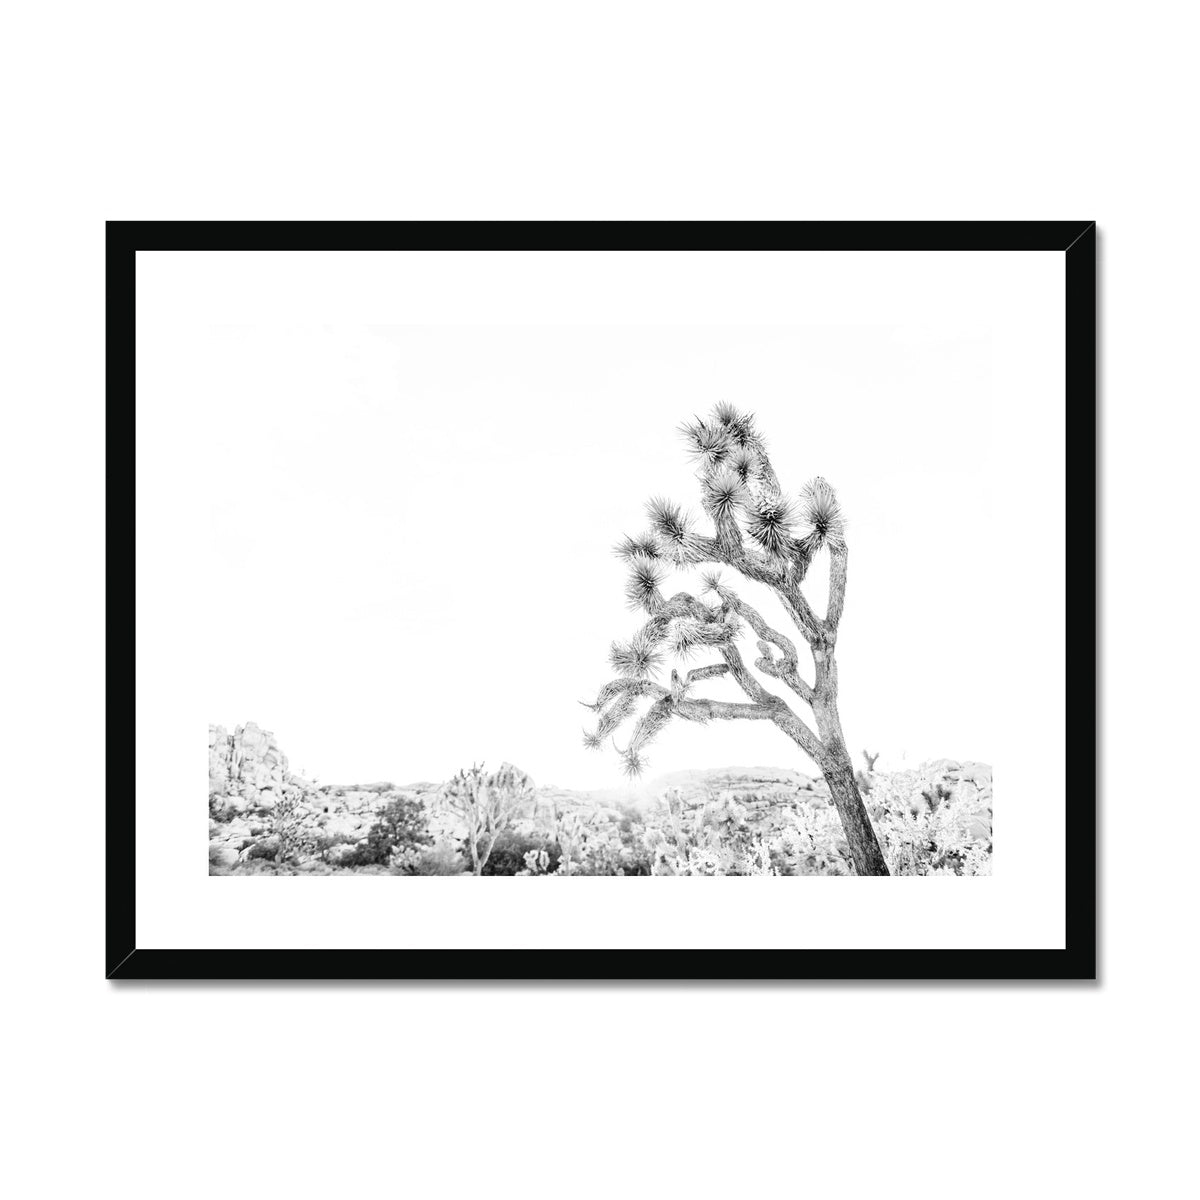 JOSHUA TREE V BW Framed & Mounted Print